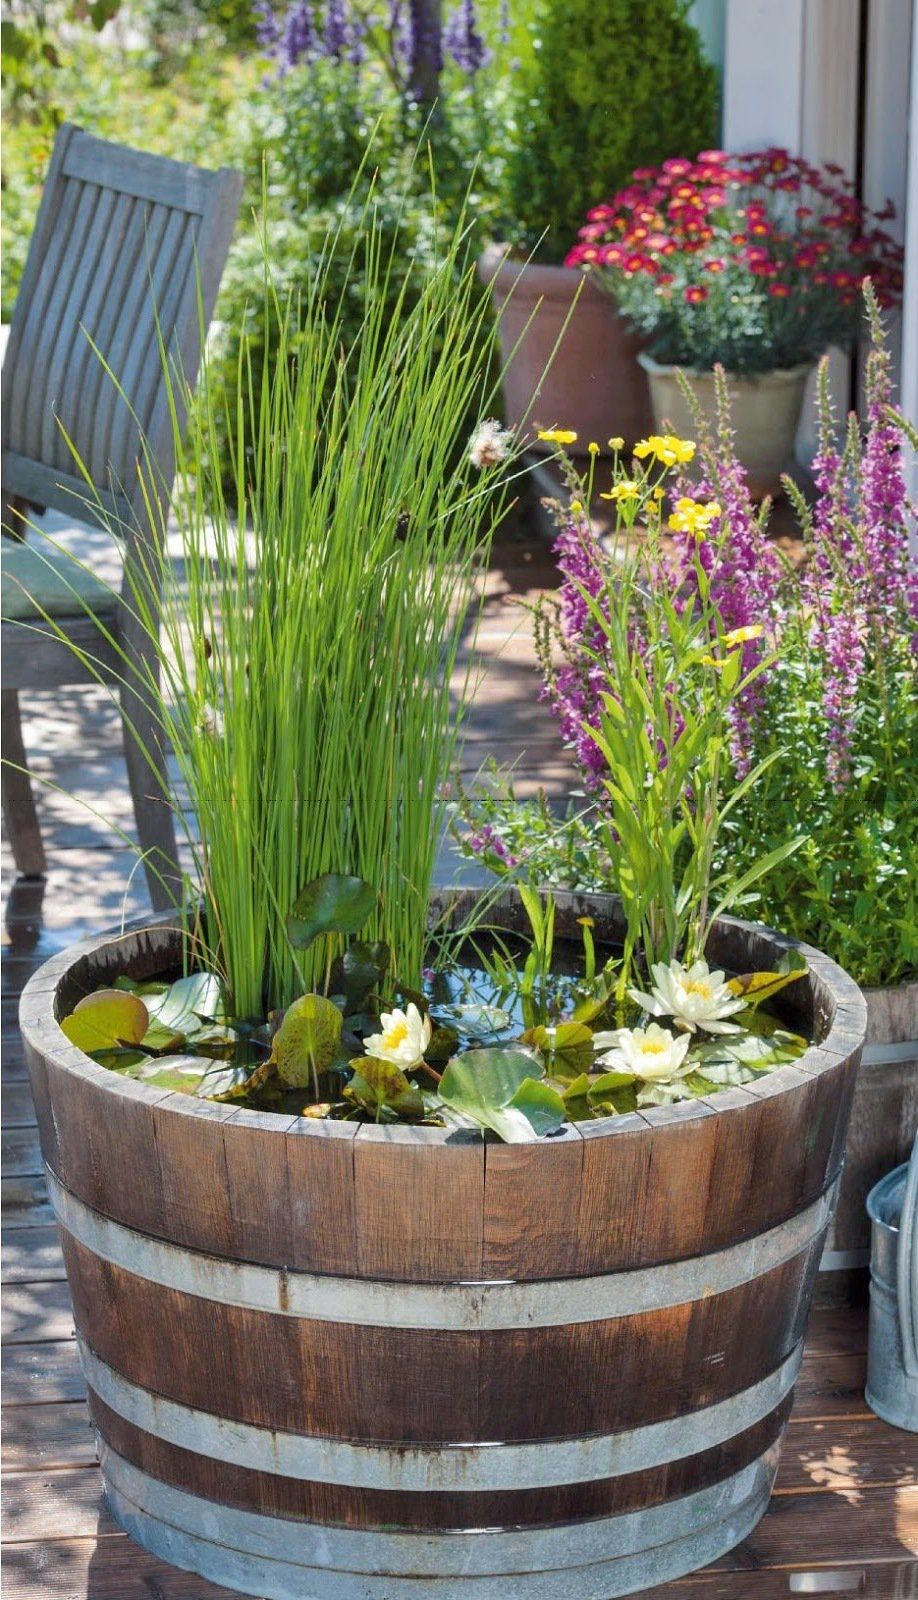 Gartenideen Zum Selber Bauen Schön Make Your Own Balcony Ideas A Mini Pond In the Pot